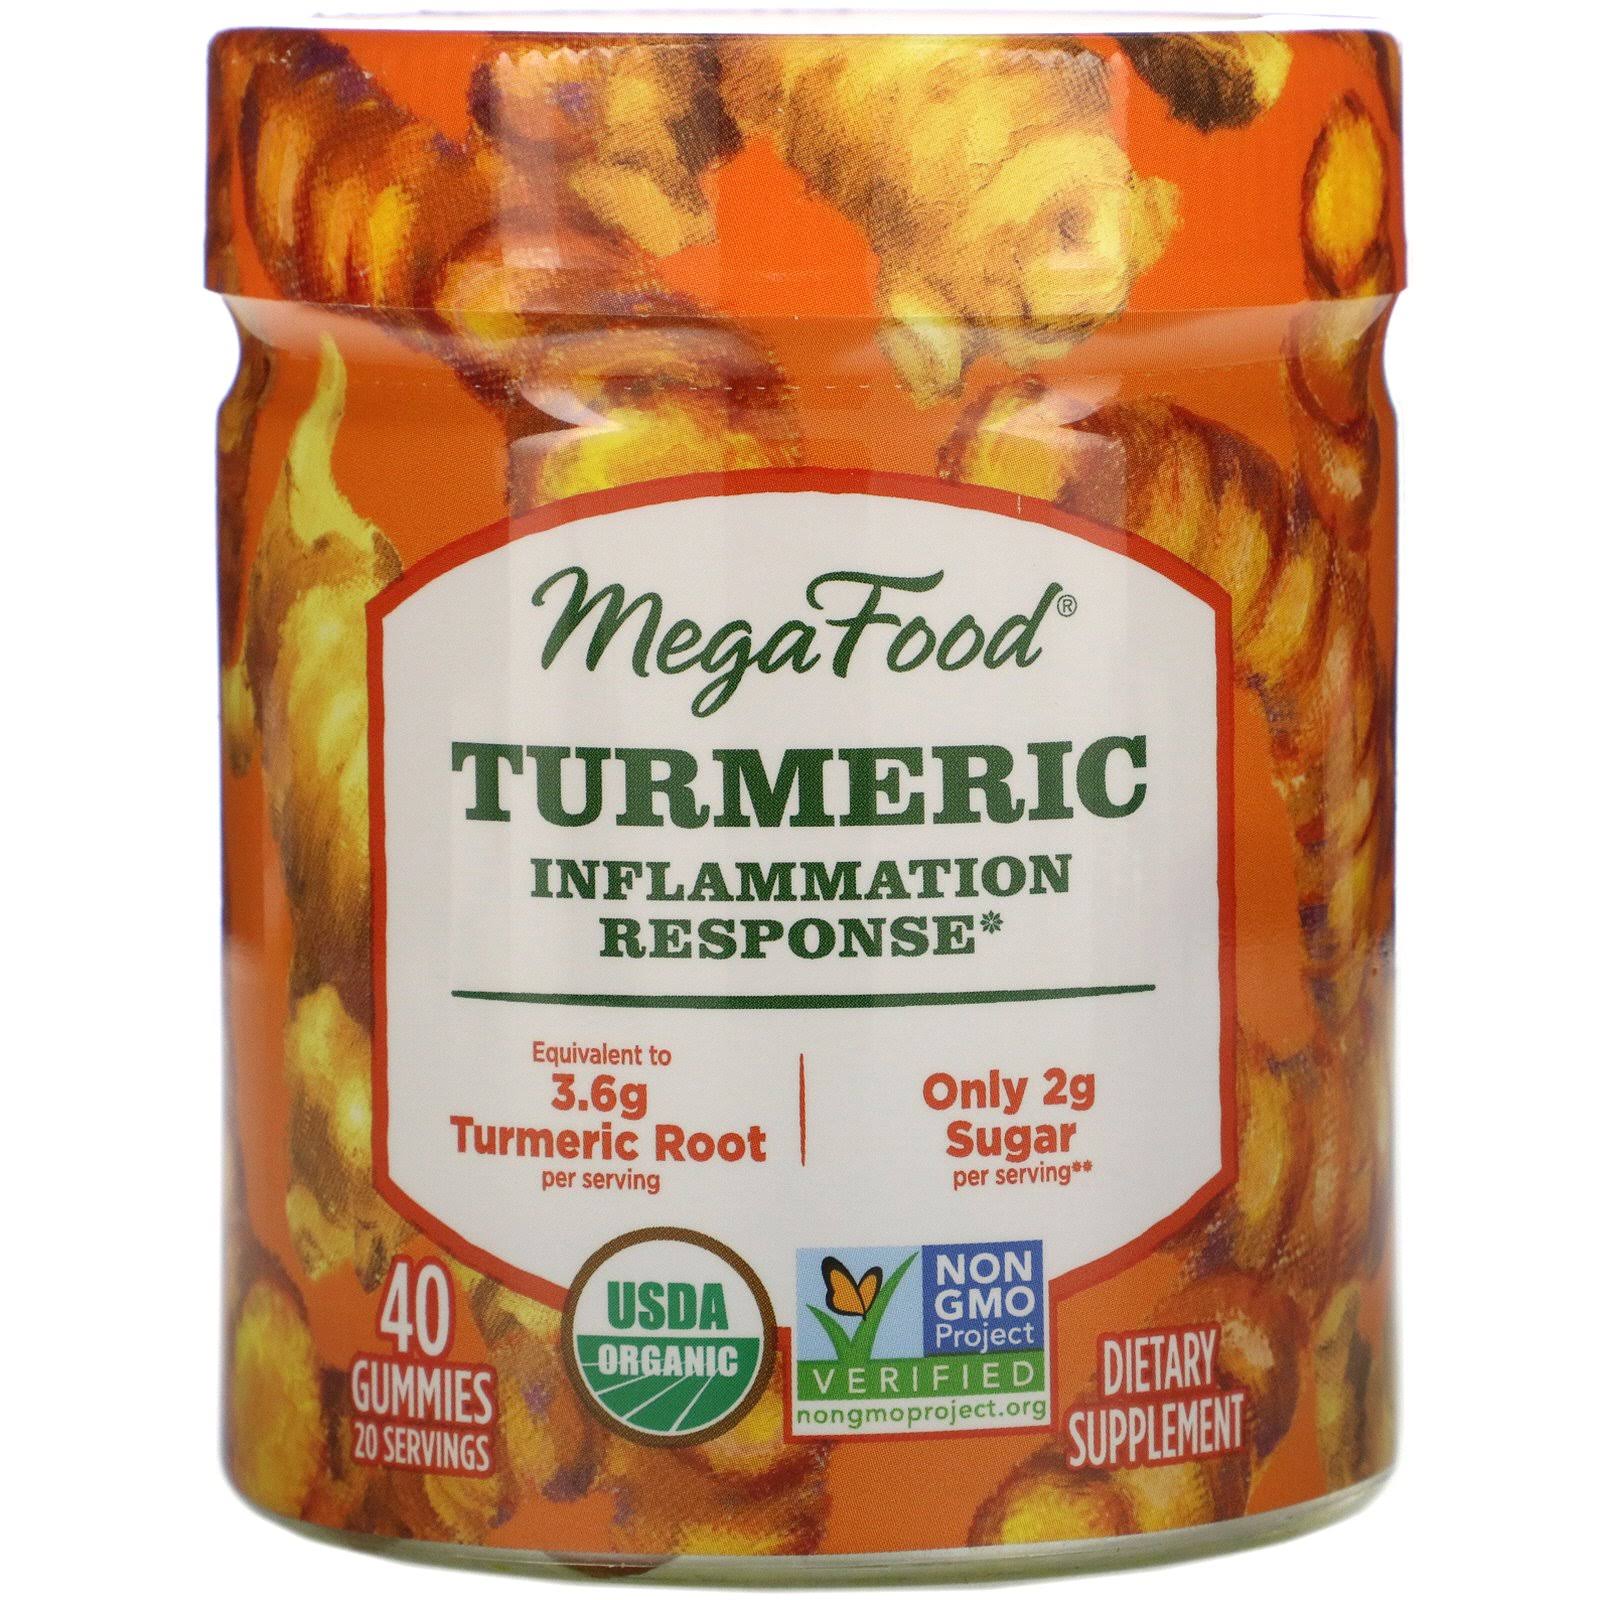 MegaFood - Turmeric Inflammation Response - 40 Gummies